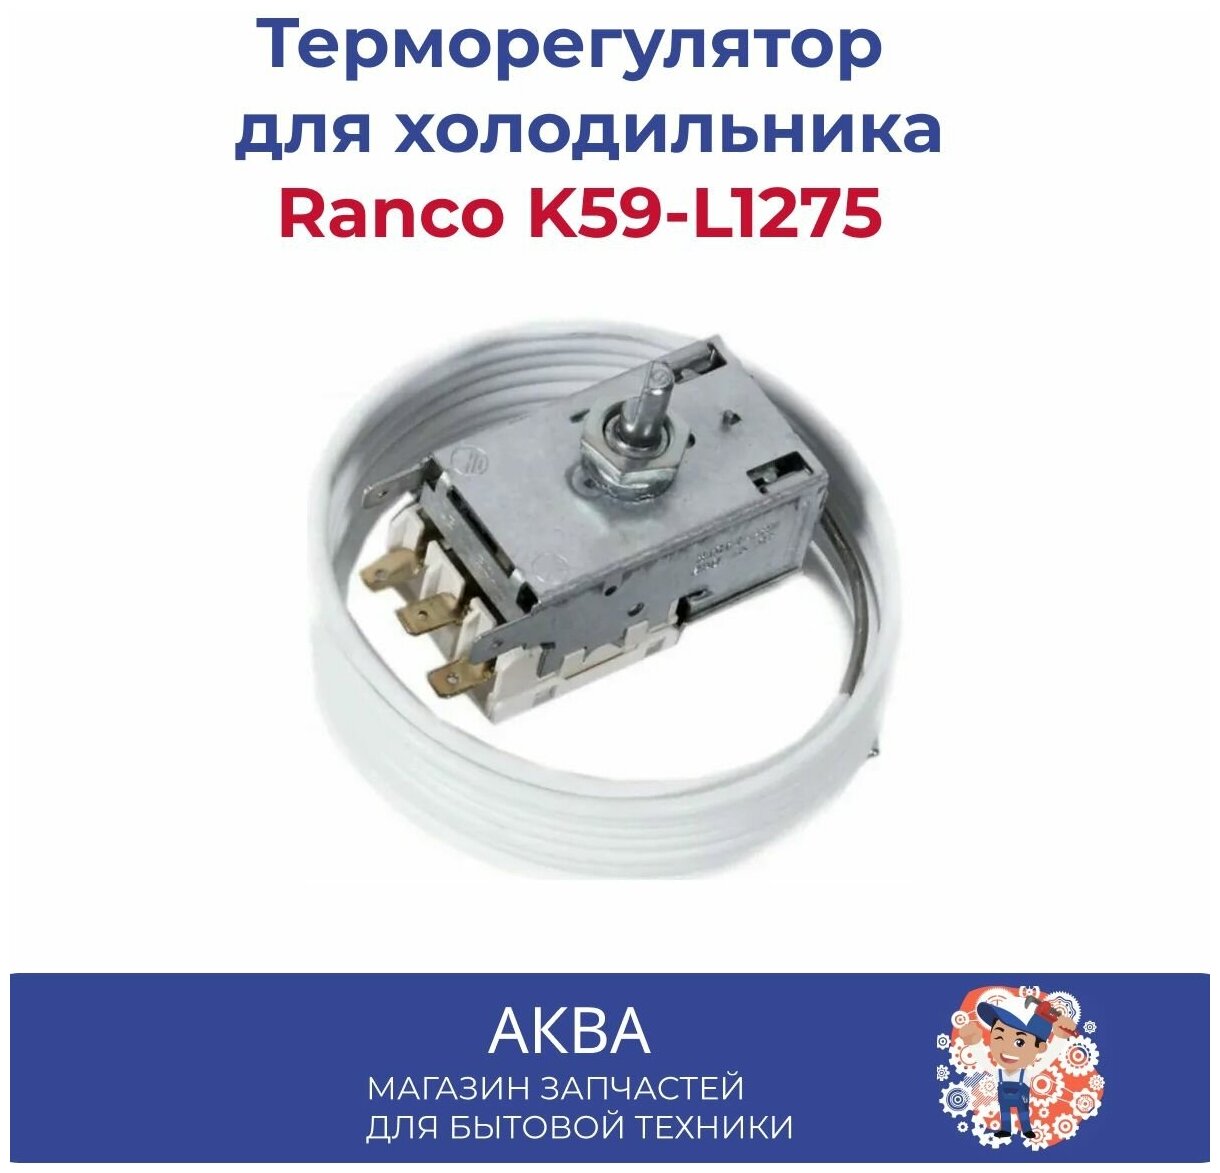 Терморегулятор RANCO K59-L1275 серебристый/белый